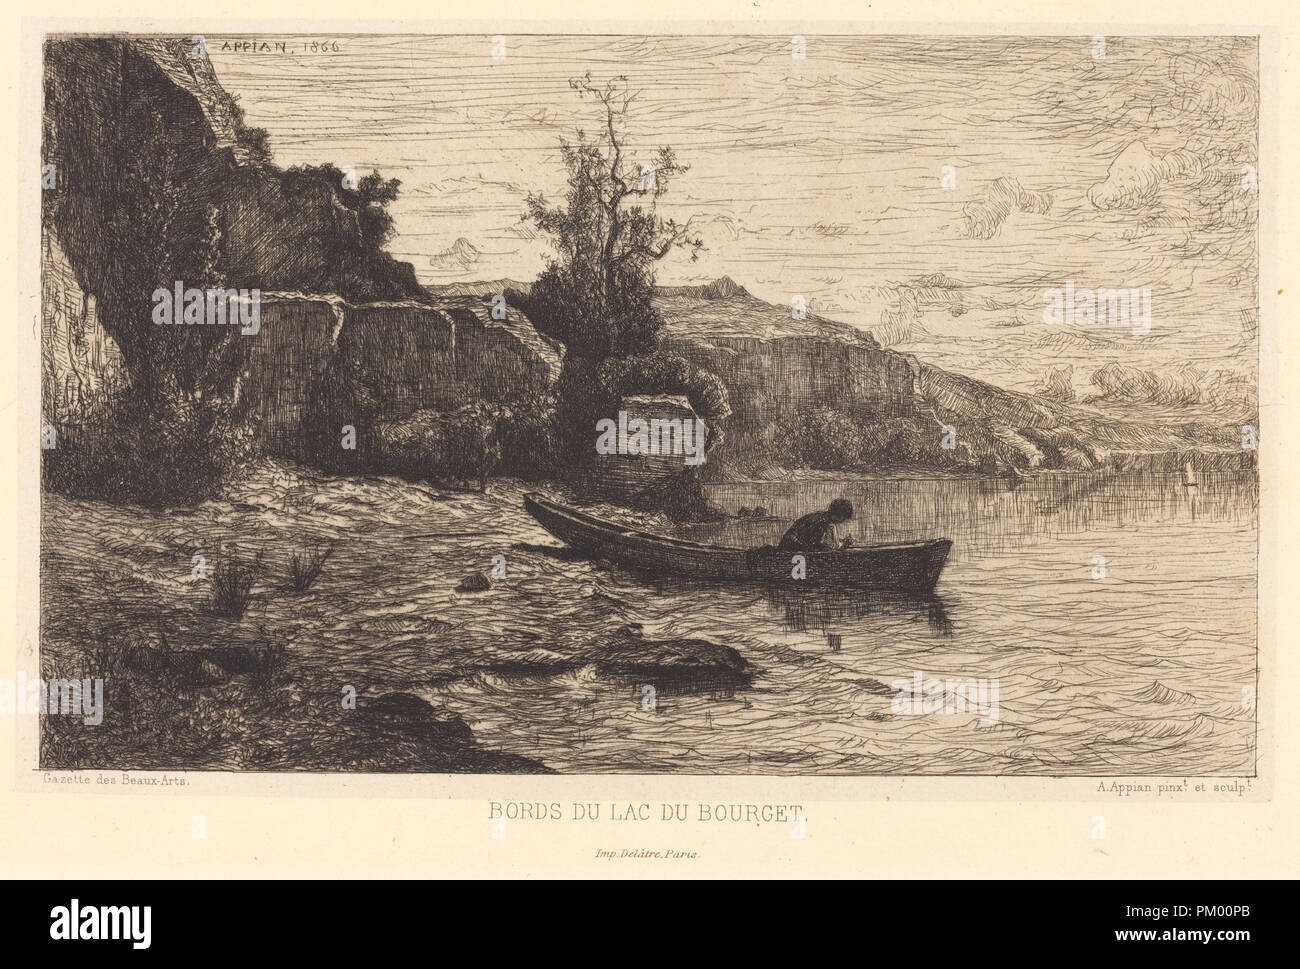 Bords du Lac du Bourget. Data: 1866. Medio: l'attacco. Museo: National Gallery of Art di Washington DC. Autore: Adolphe Appia. Foto Stock